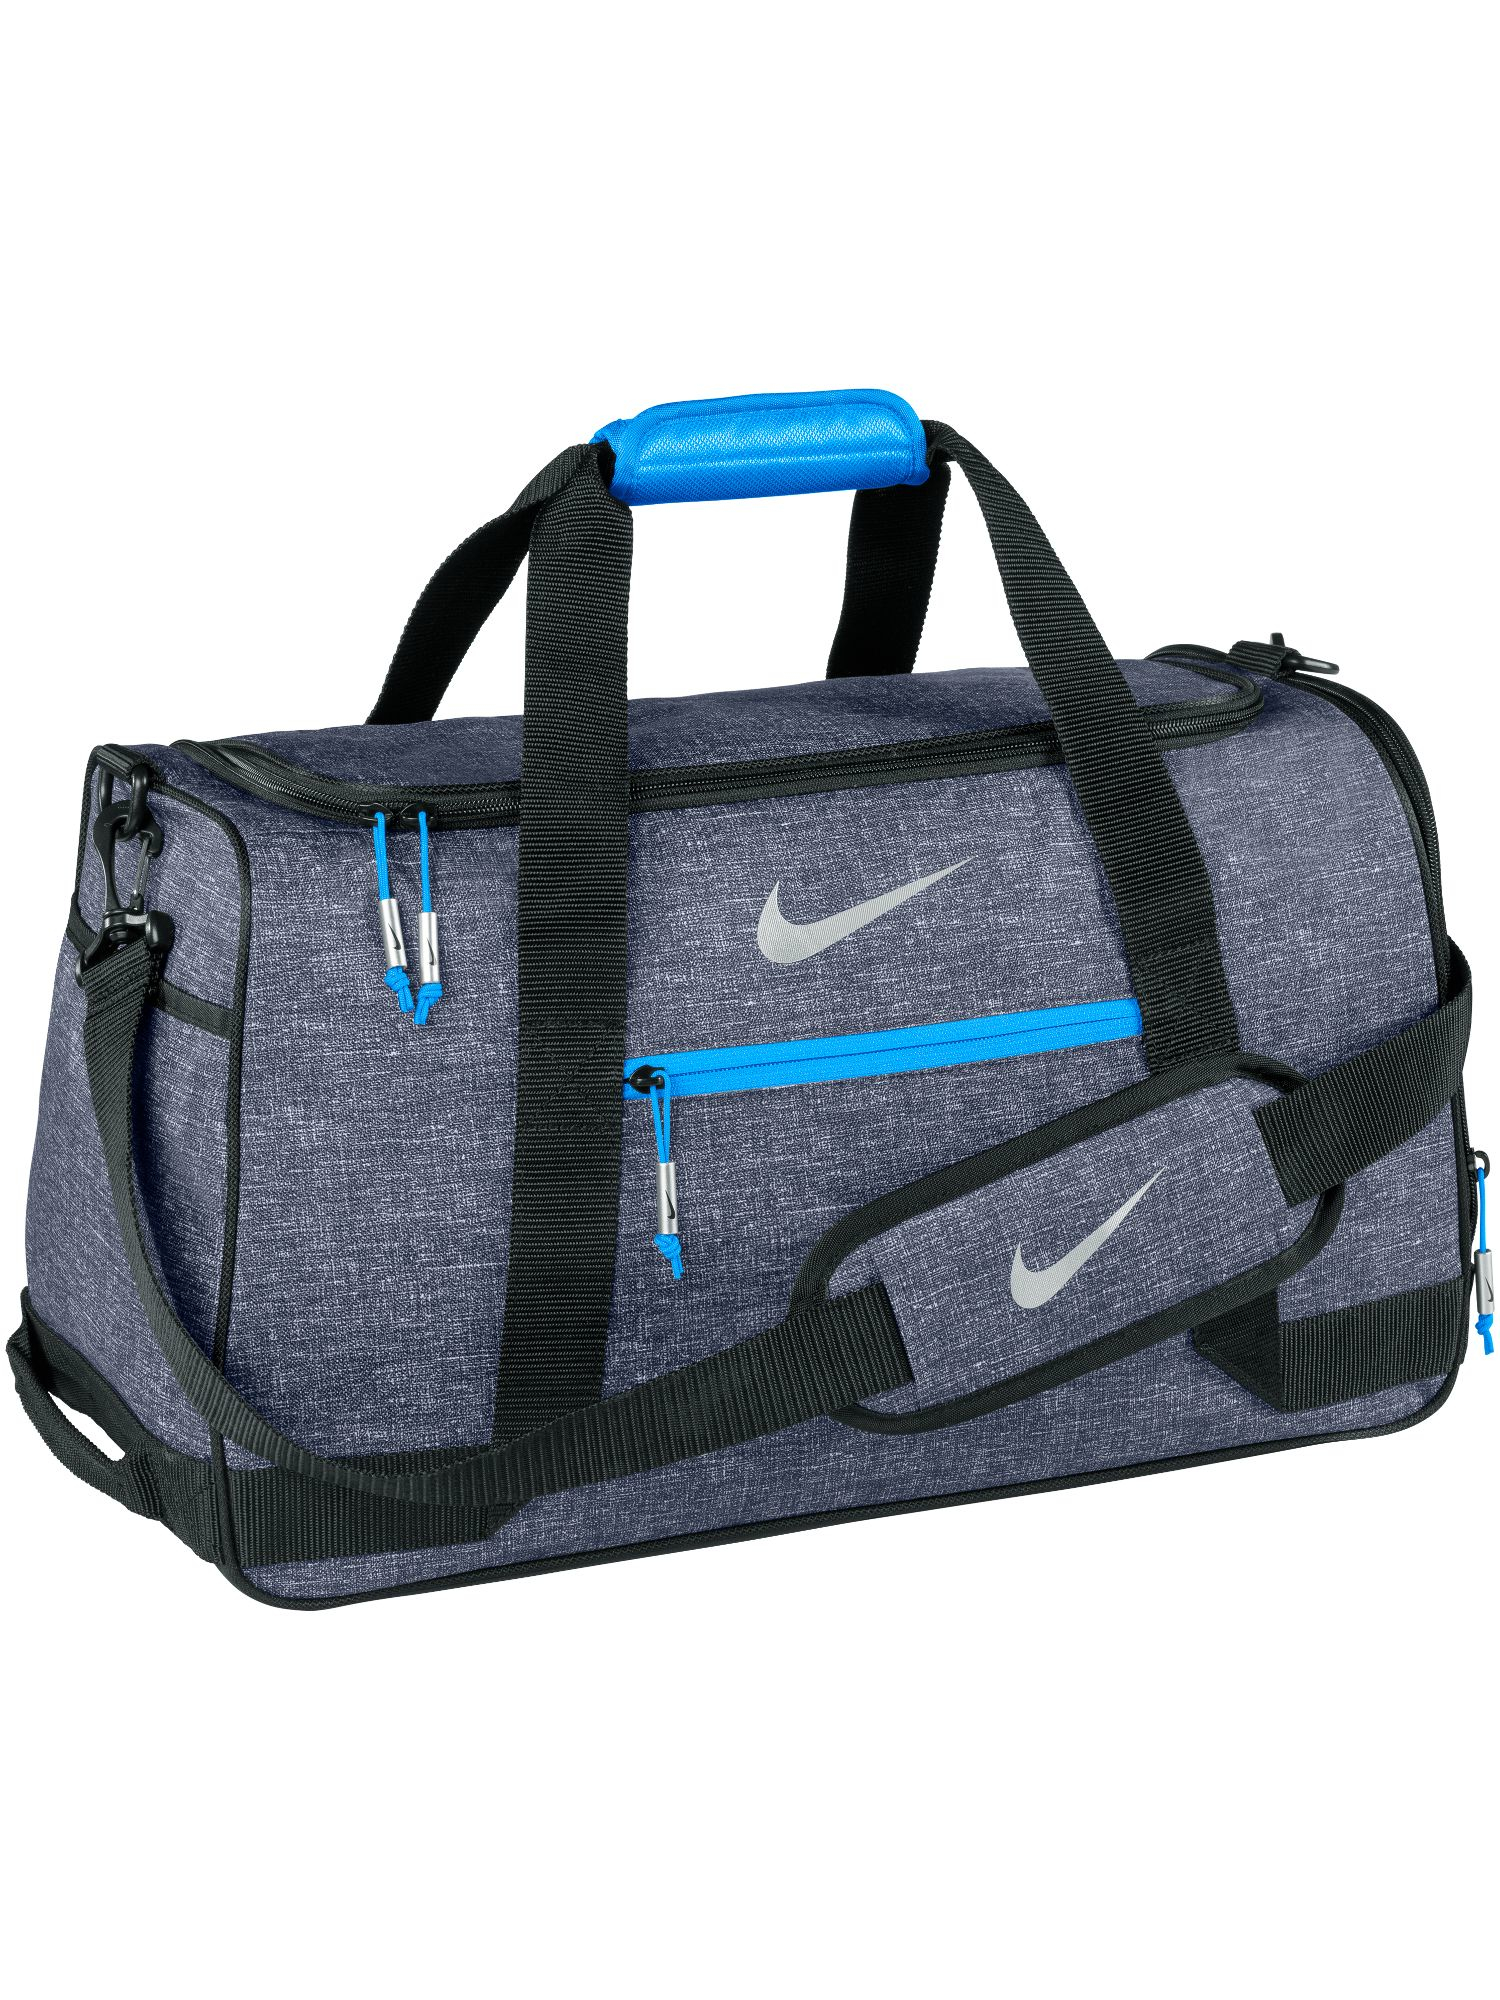 Nike Synthetic Sport 3 Duffle Bag in Grey (Blue) for Men - Lyst